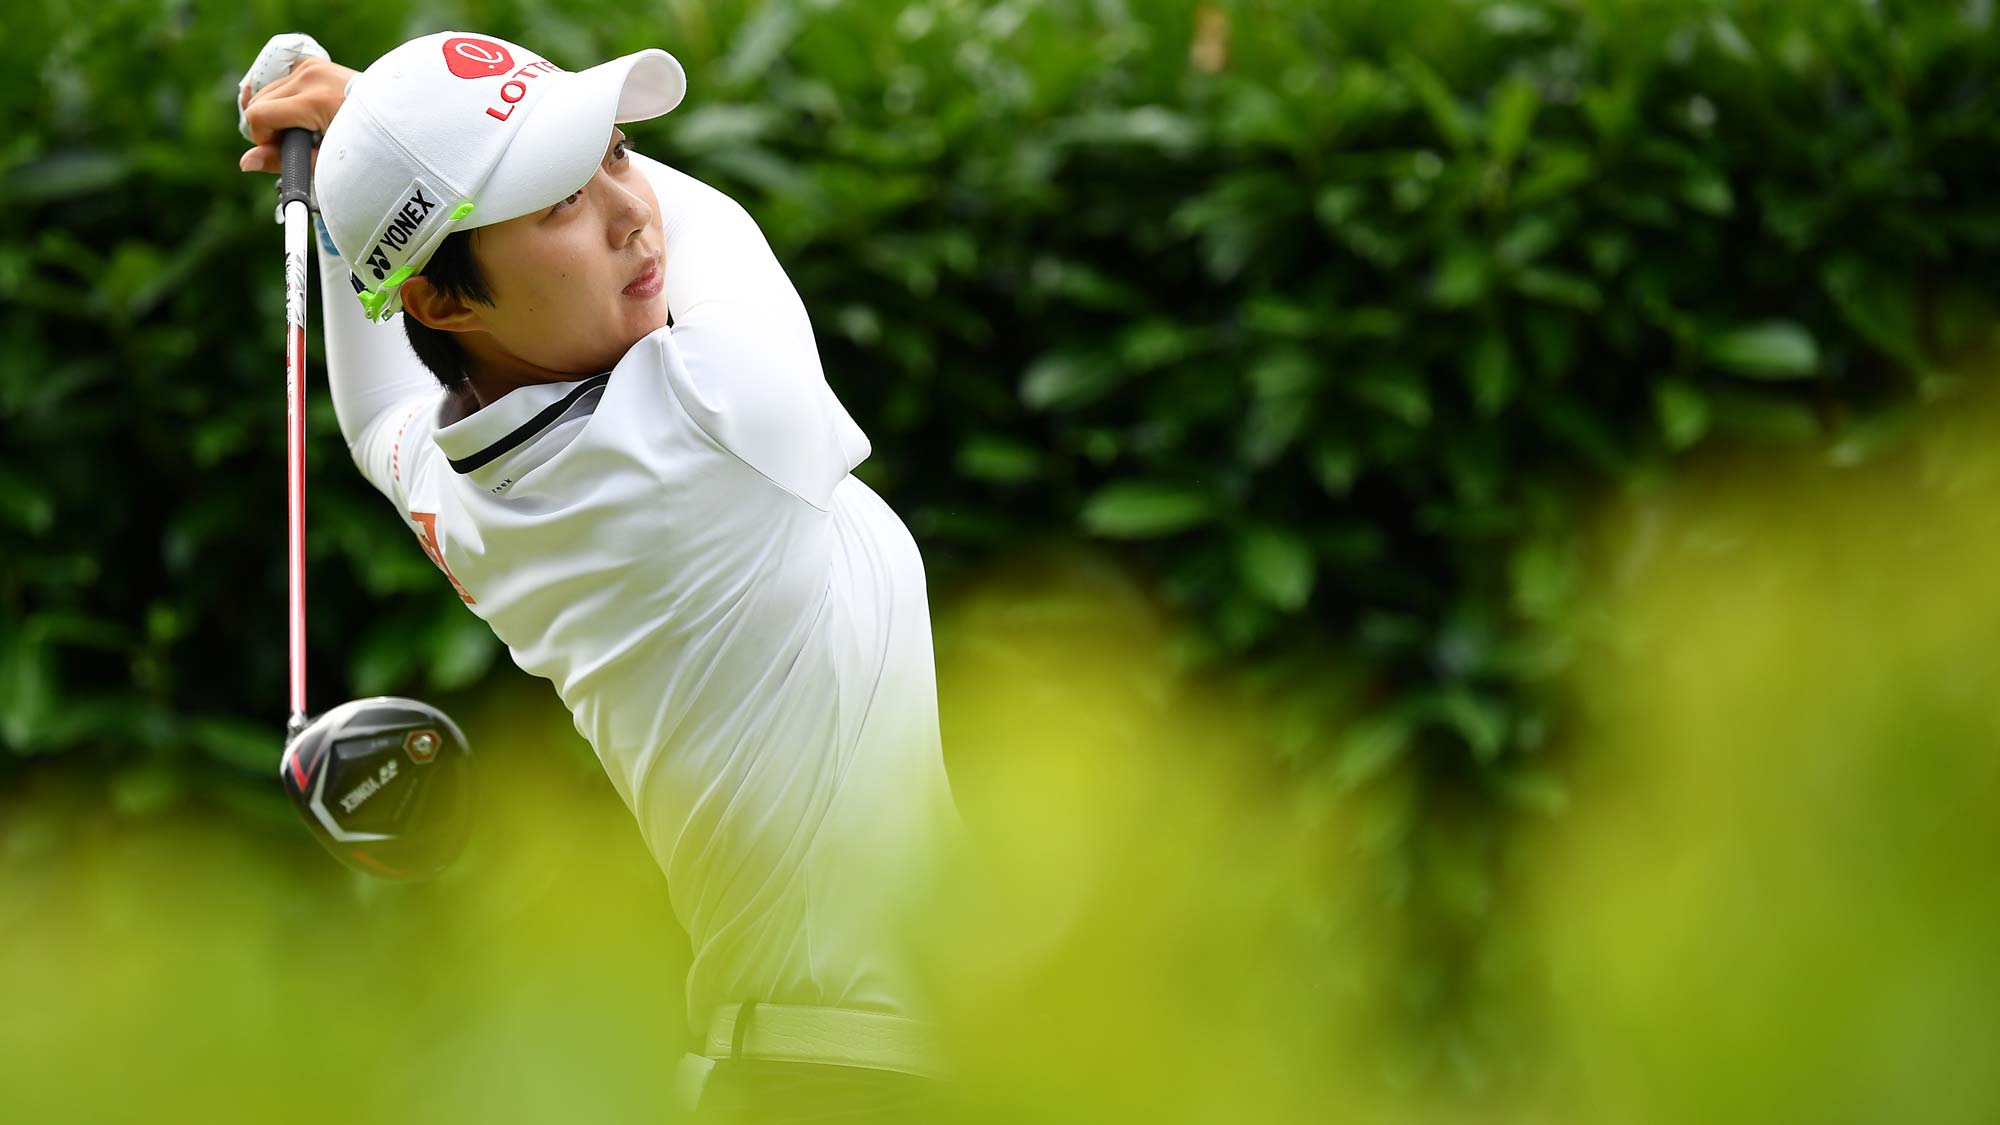 Hyo Joo Kim of Korea plays a shot oduring day 3 of the Evian Championship